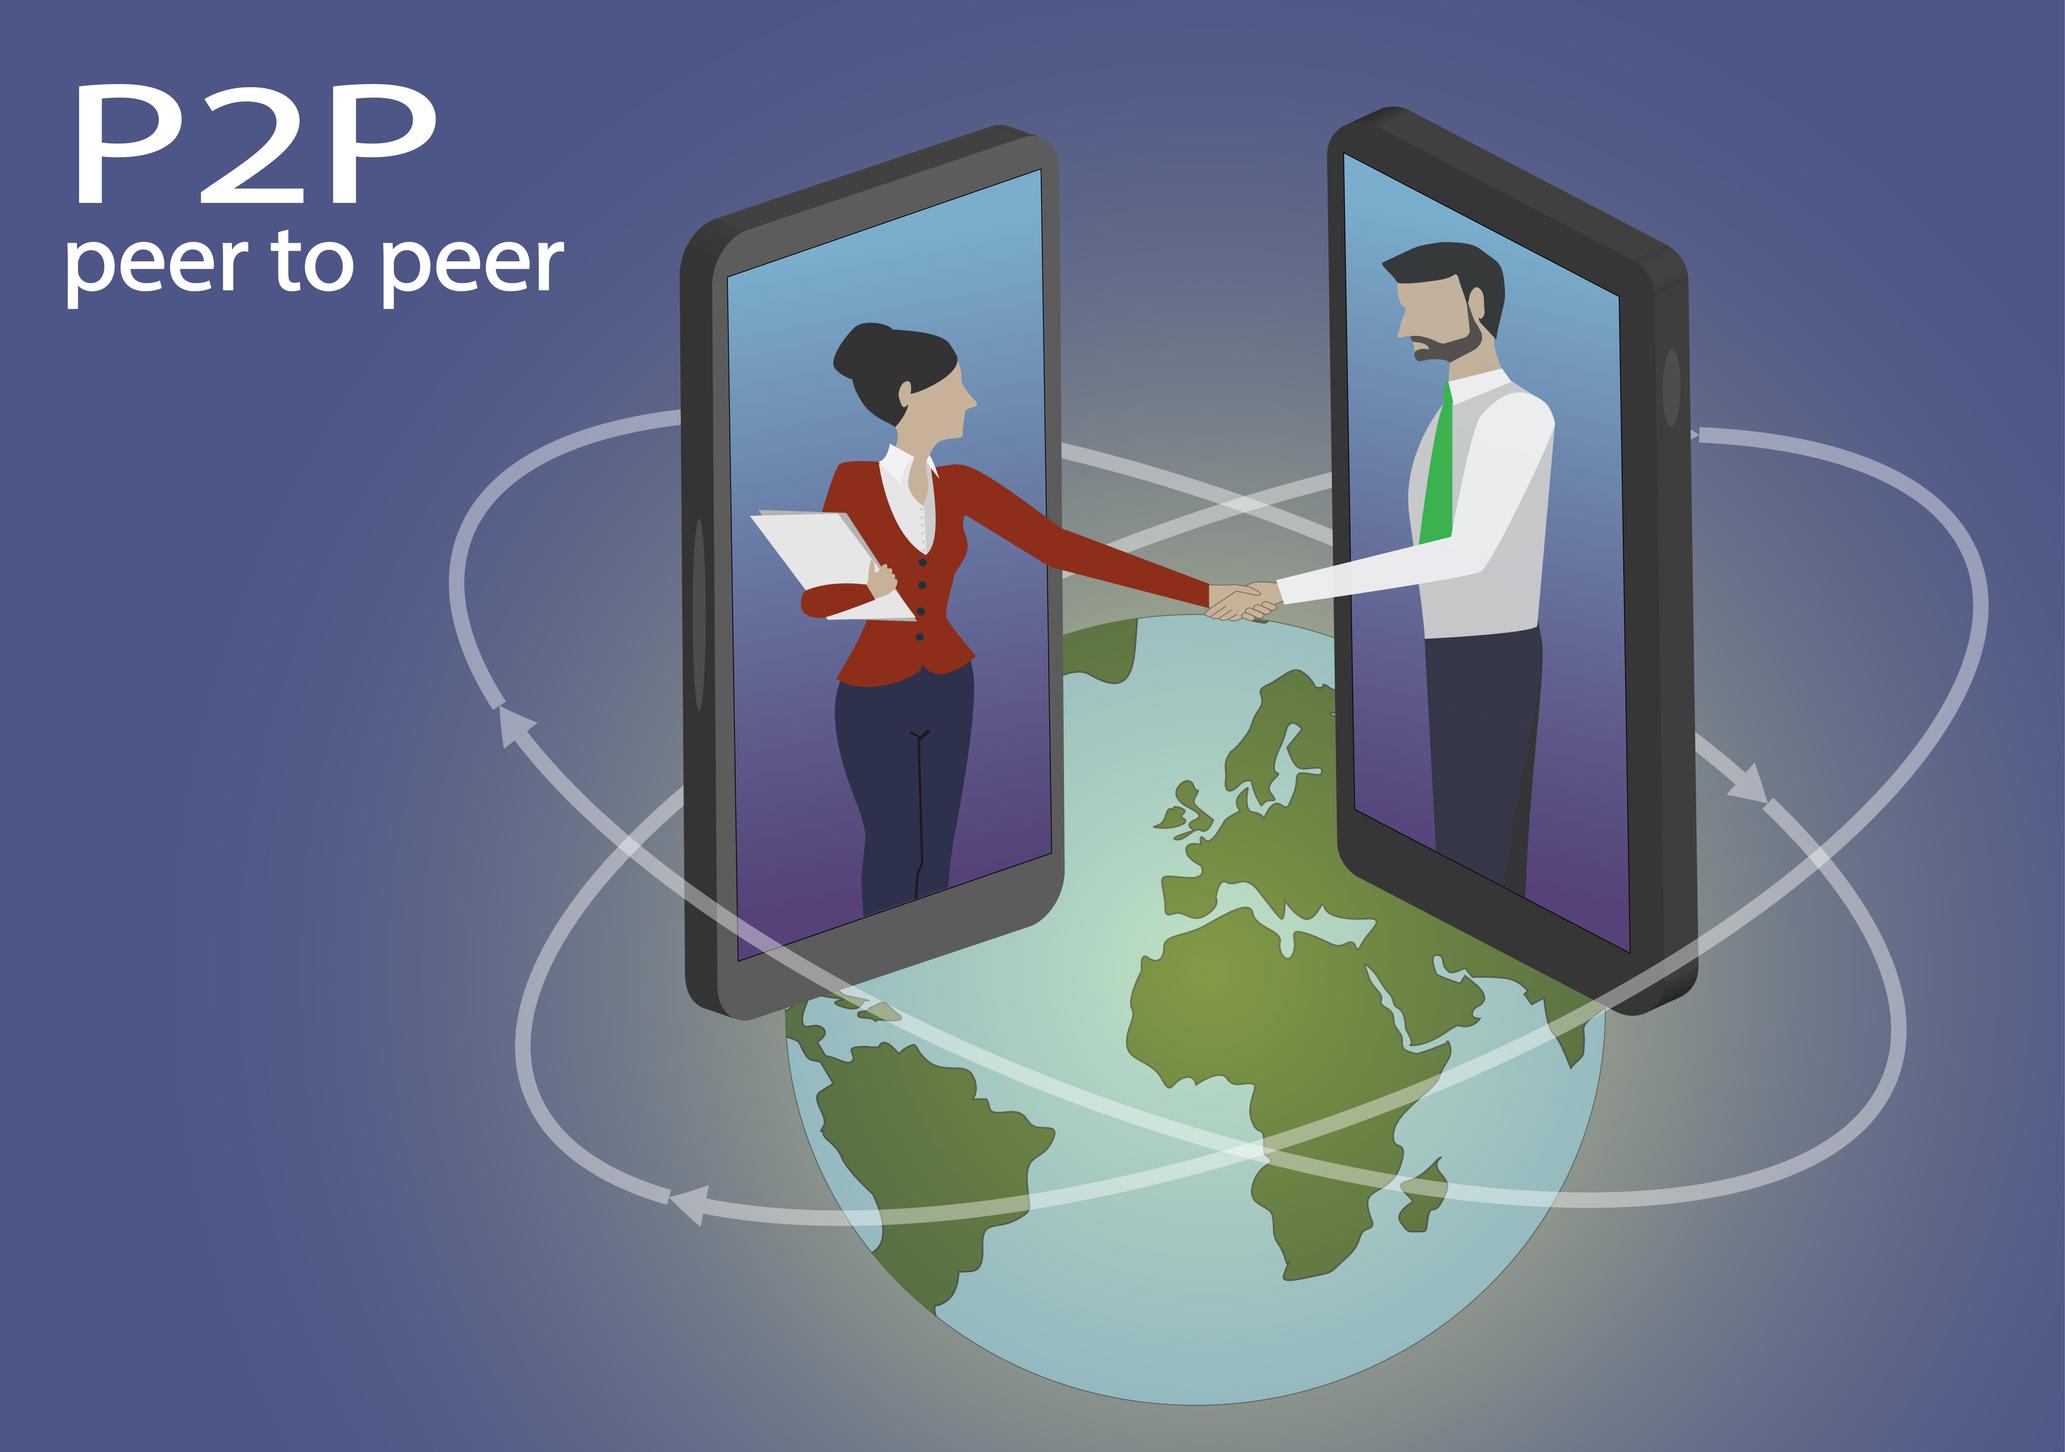 P2p торговля. Peer to peer сеть. P2p кредитование. P2p крипто.